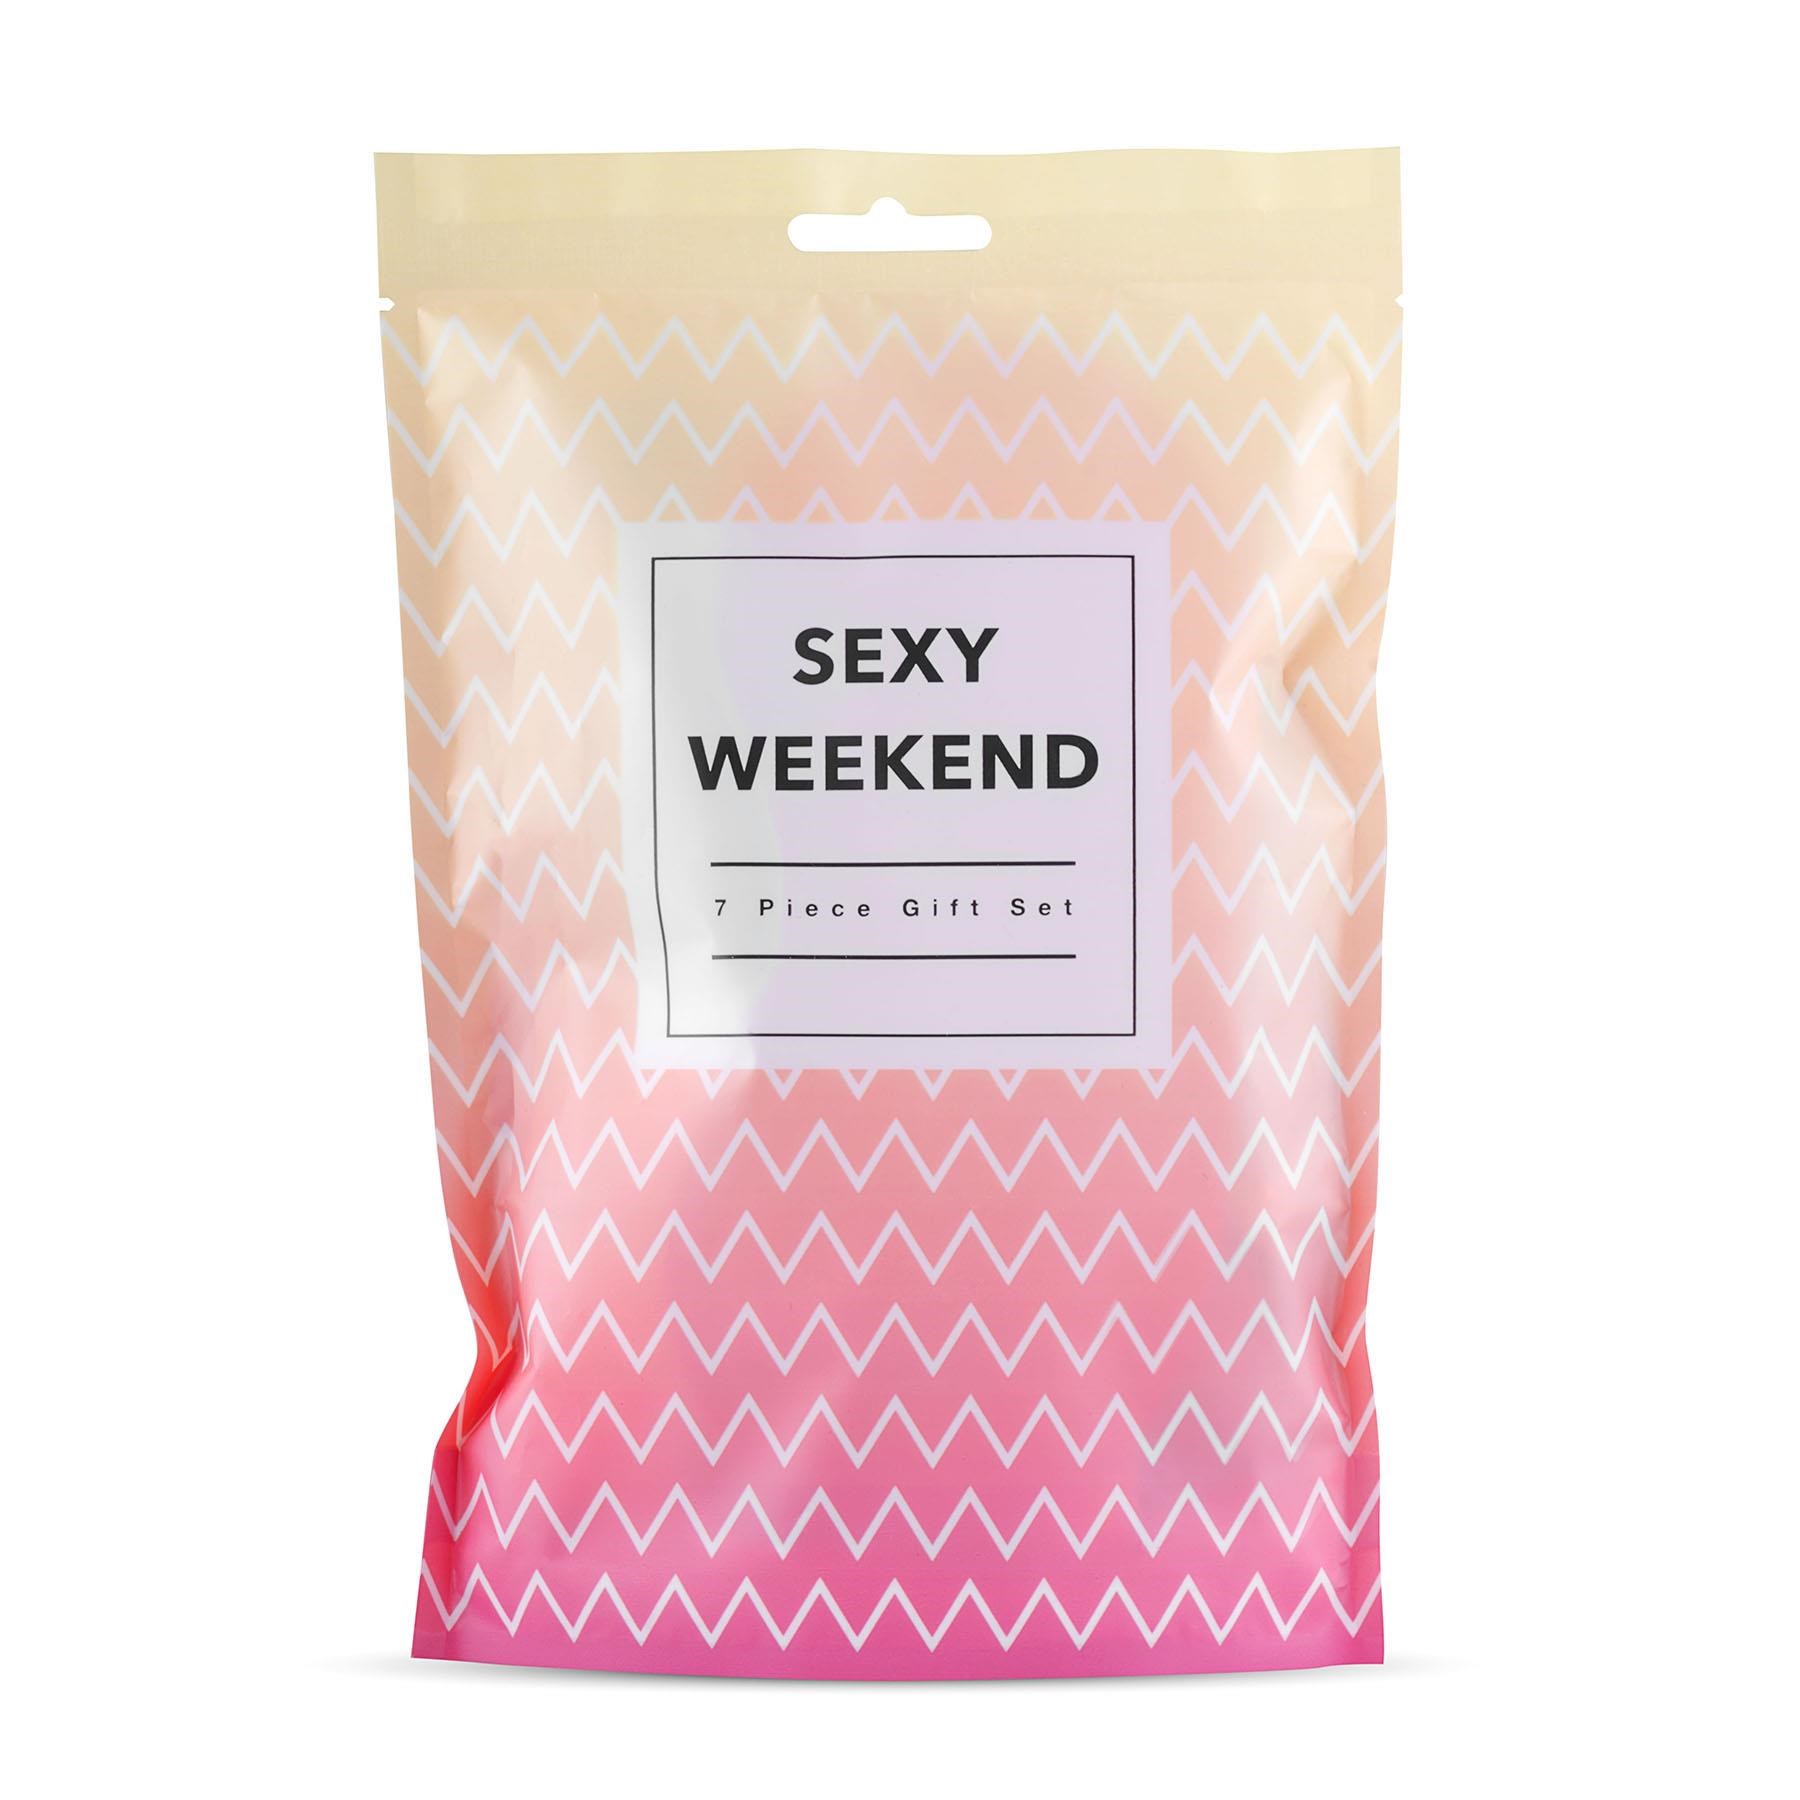 Loveboxxx Sexy Weekend 7 Piece Gift Set - Packaging